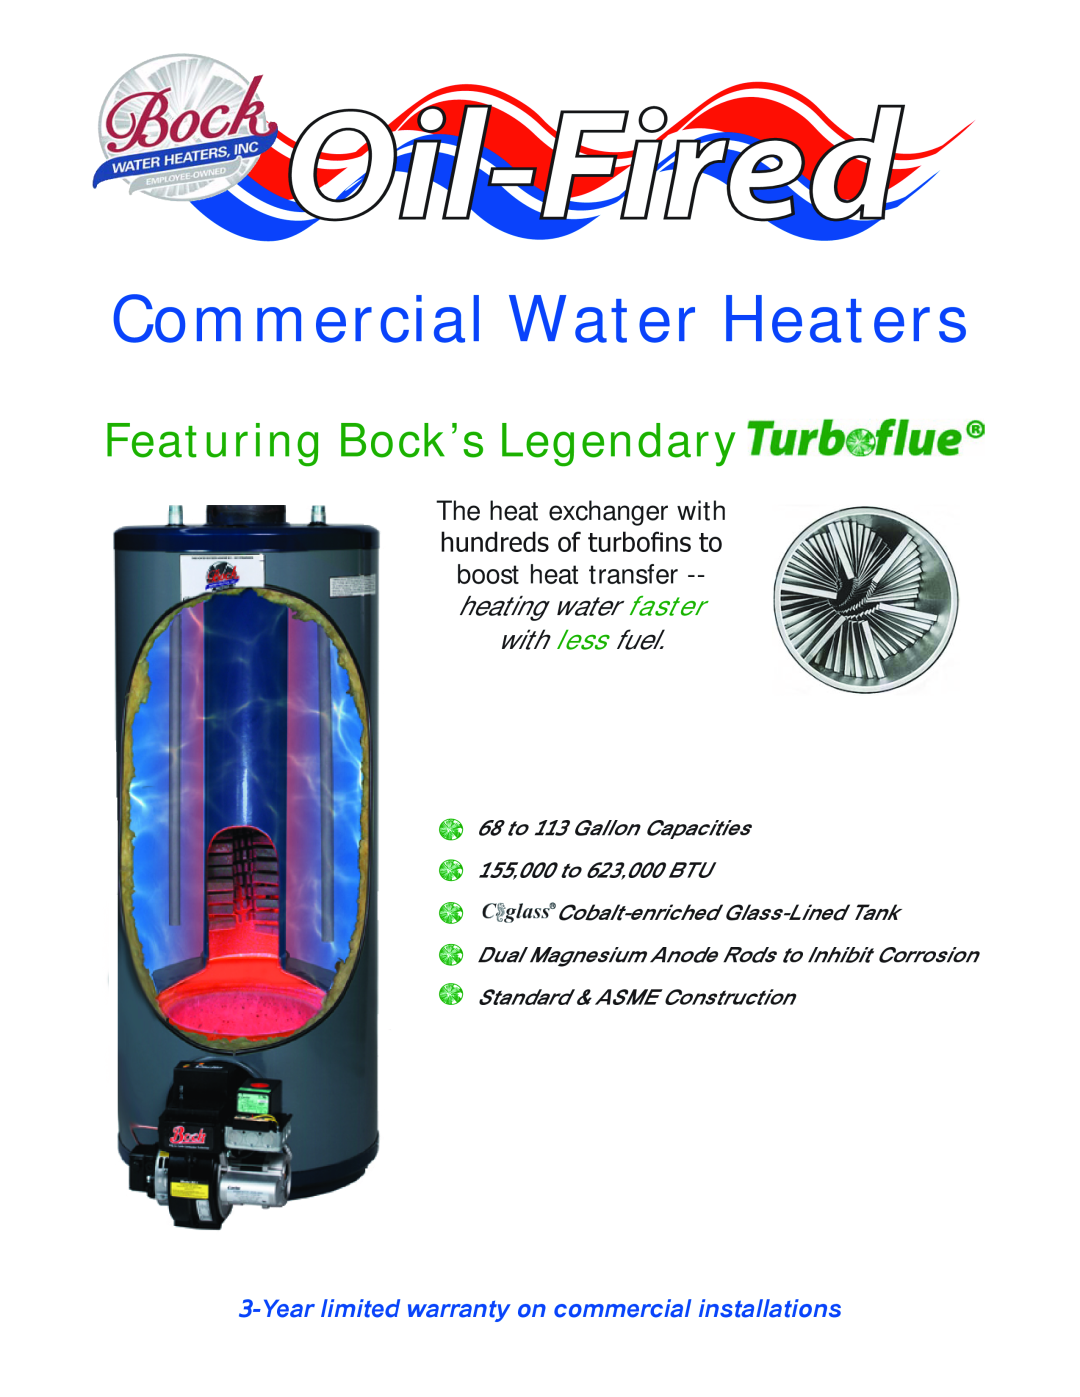 Bock Water heaters Commercial Oil-Fired Water Heaters warranty Commercial Water Heaters, Featuring Bock’s Legendary 